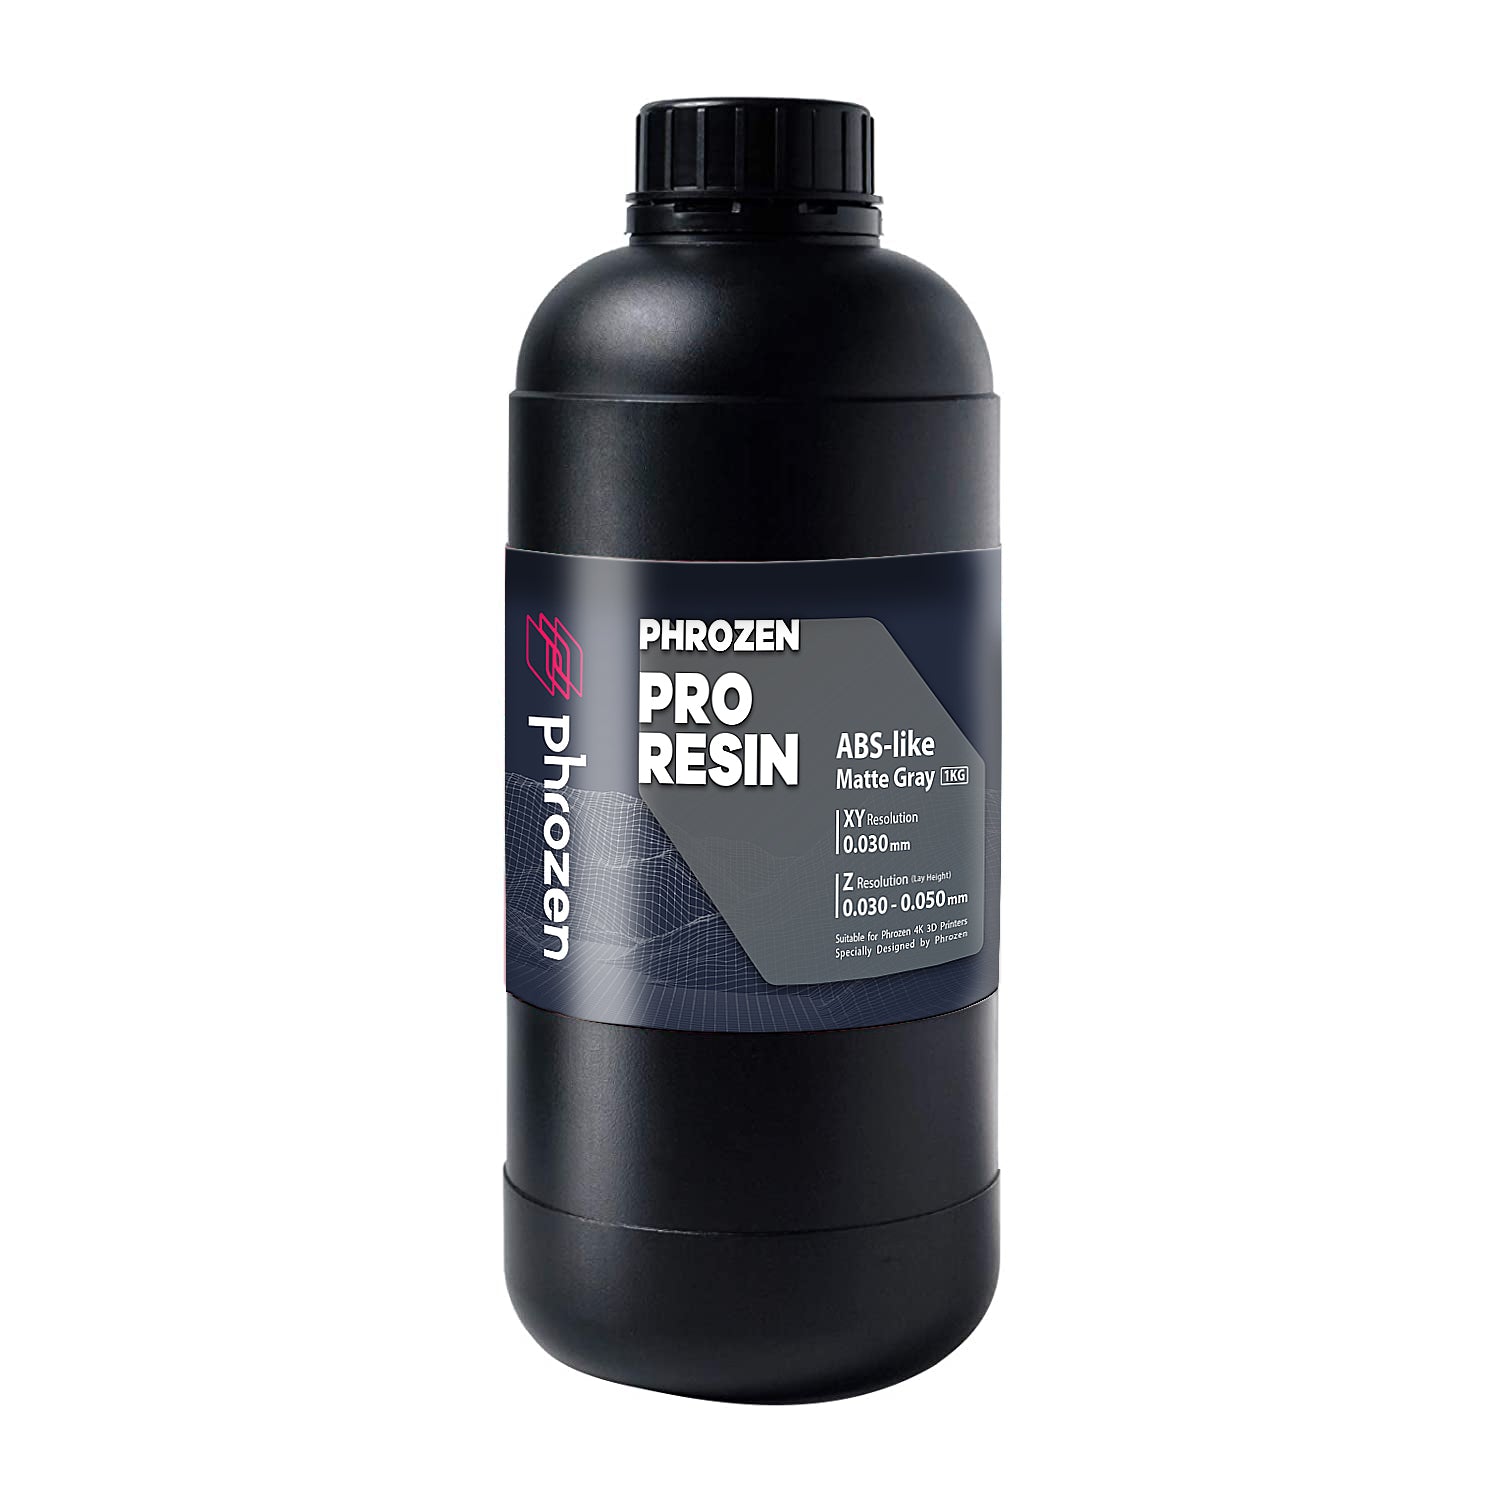 Phrozen Pro Series ABS Like Resin Matte Gray 1KG